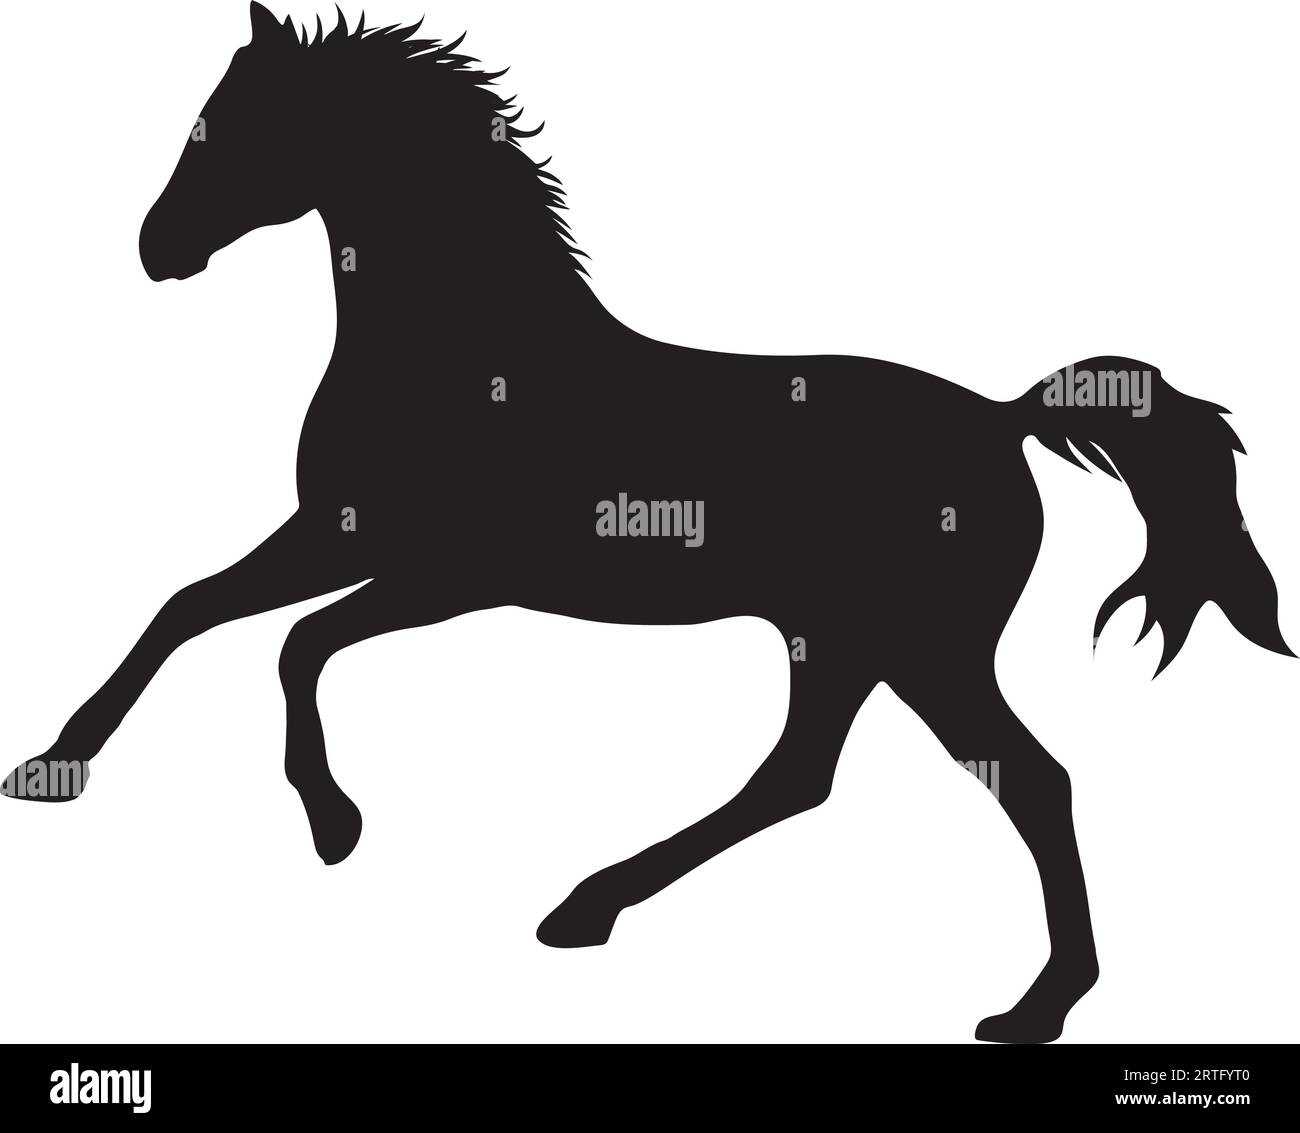 Running horse vector, silhouette or illustration file Stock Vector ...